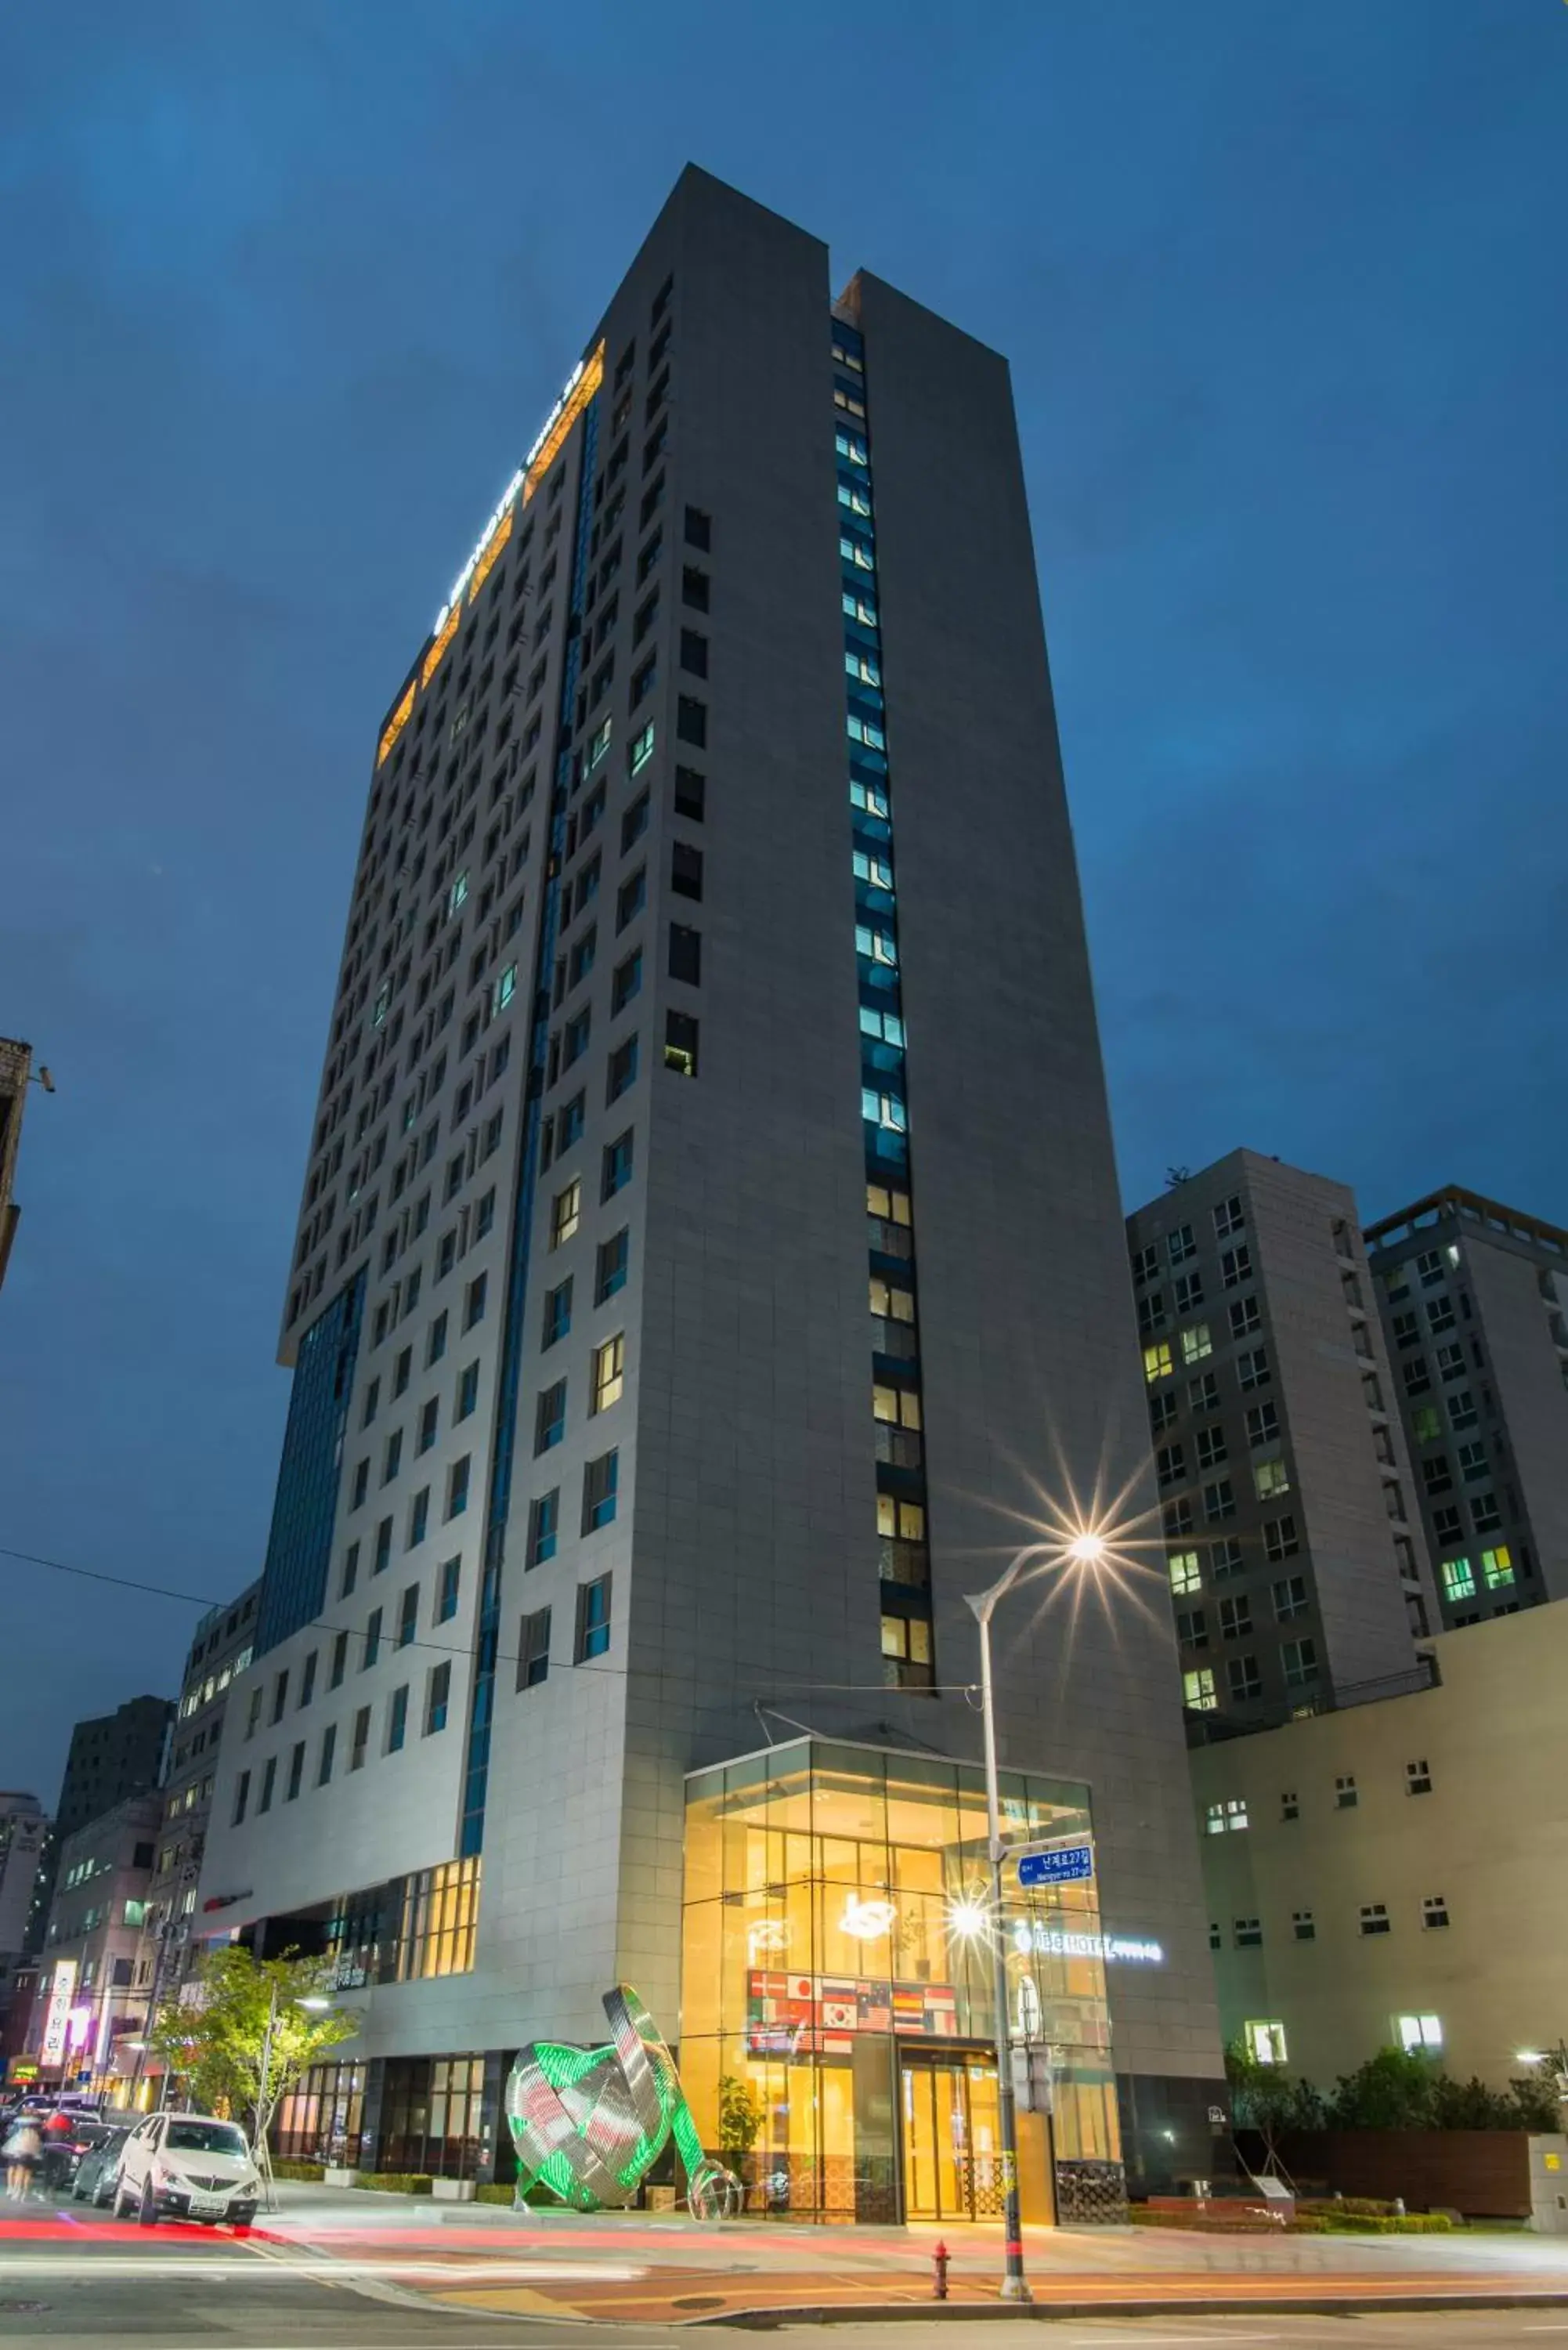 Facade/entrance, Property Building in IBC Hotel Dongdaemun